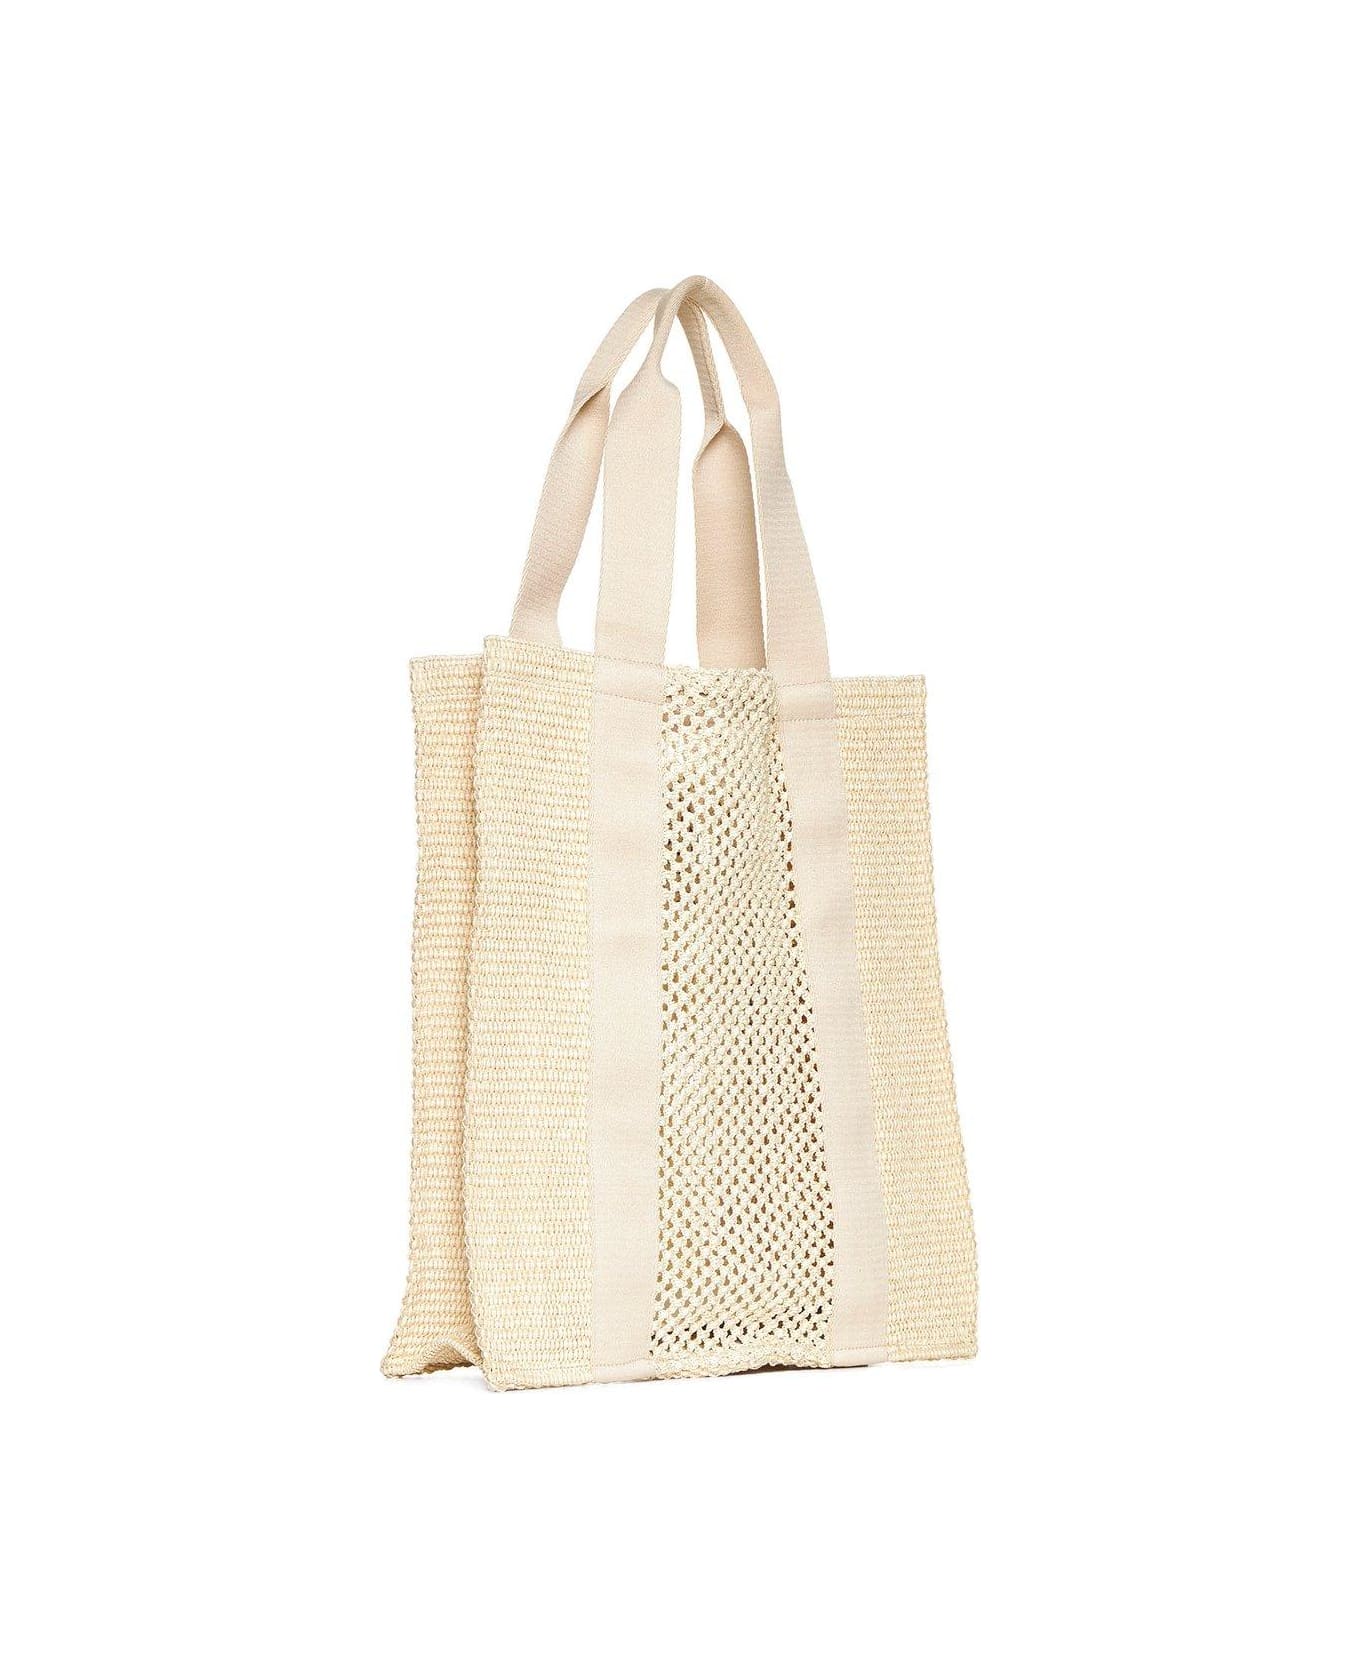 Isabel Marant Striped Woven Top Handle Bag - Beige/beige